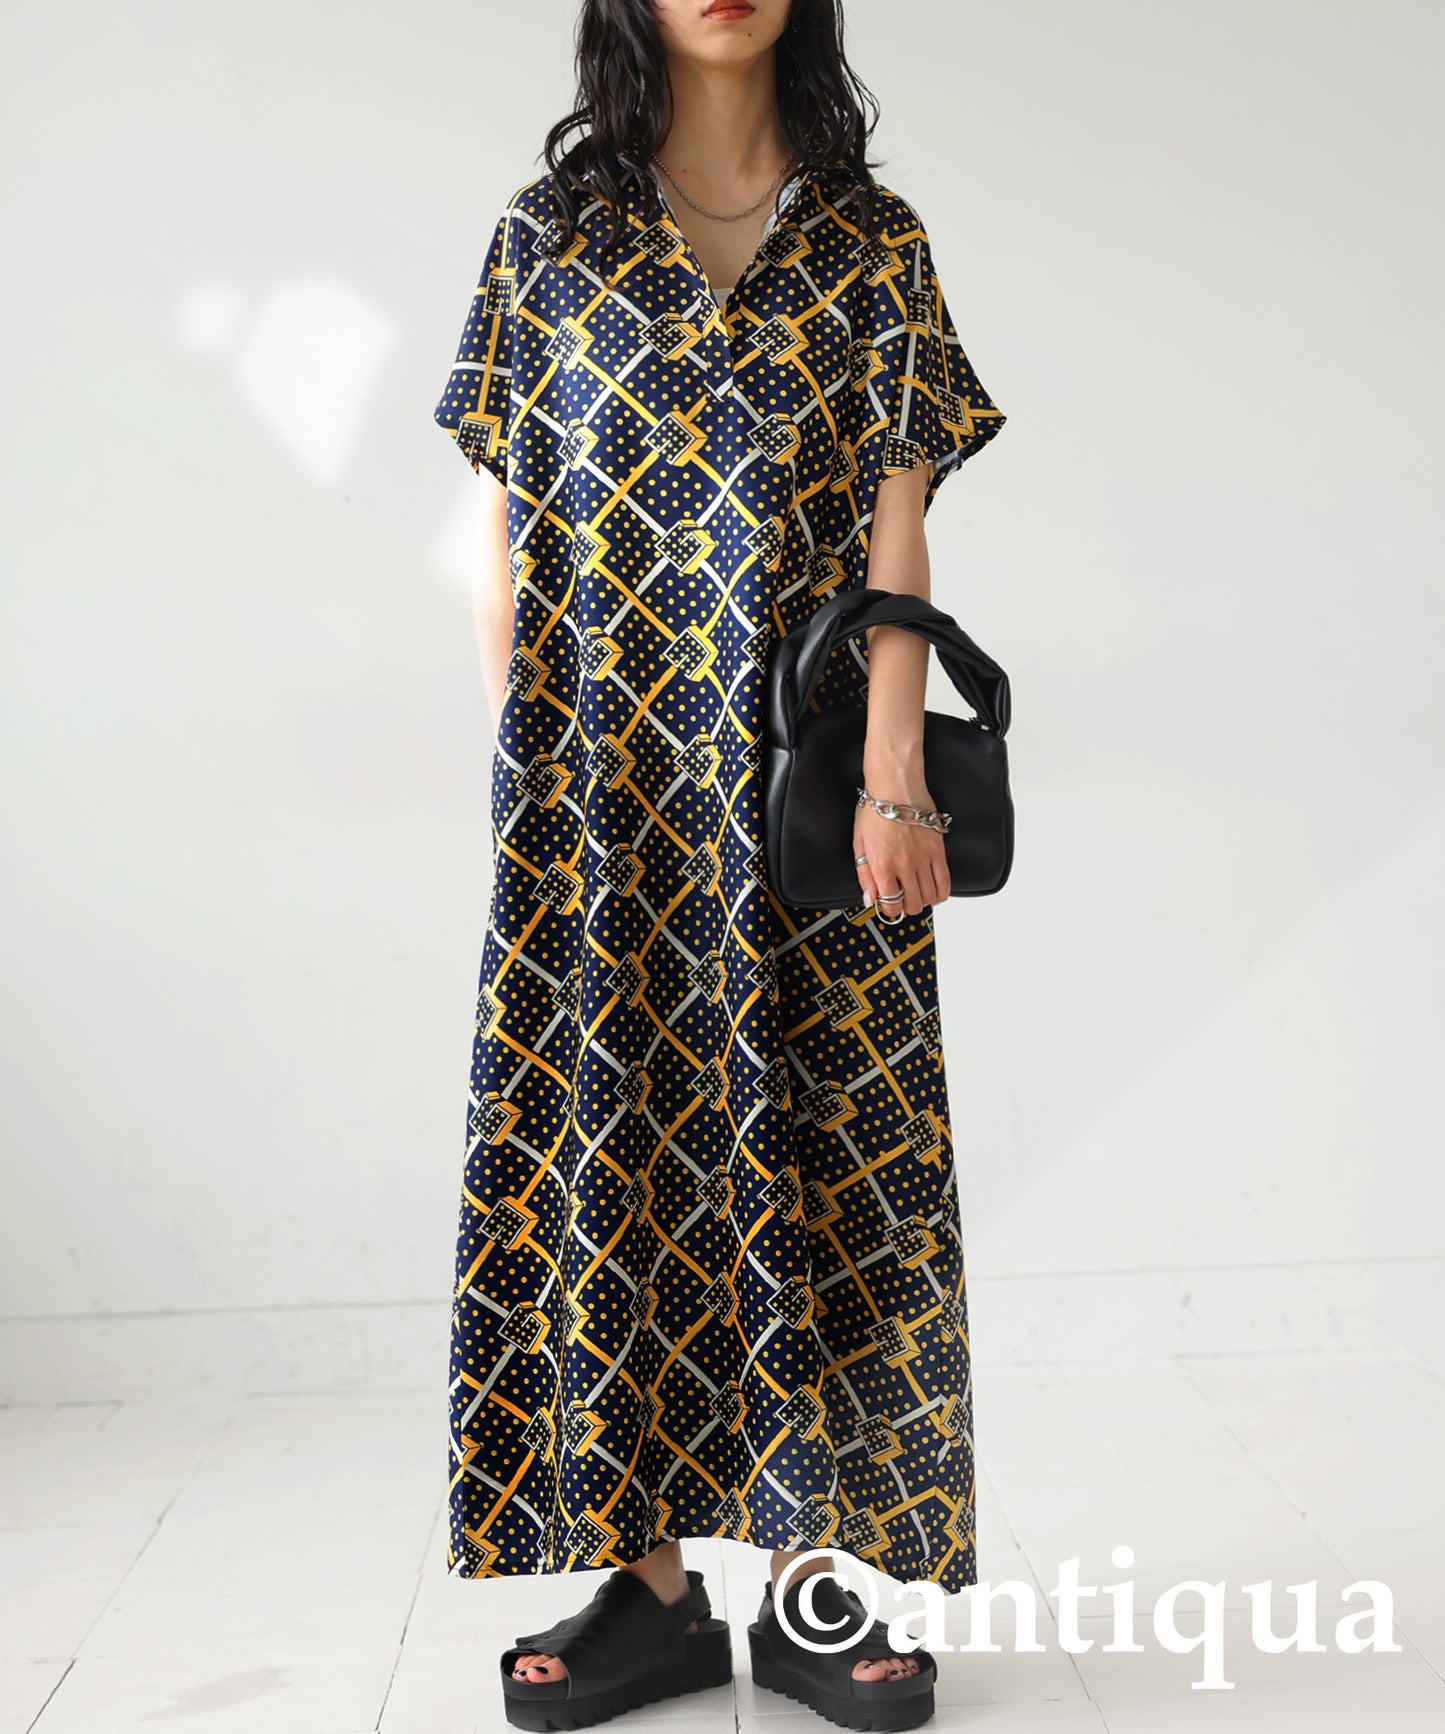 Retro Pattern Design Dress Ladies